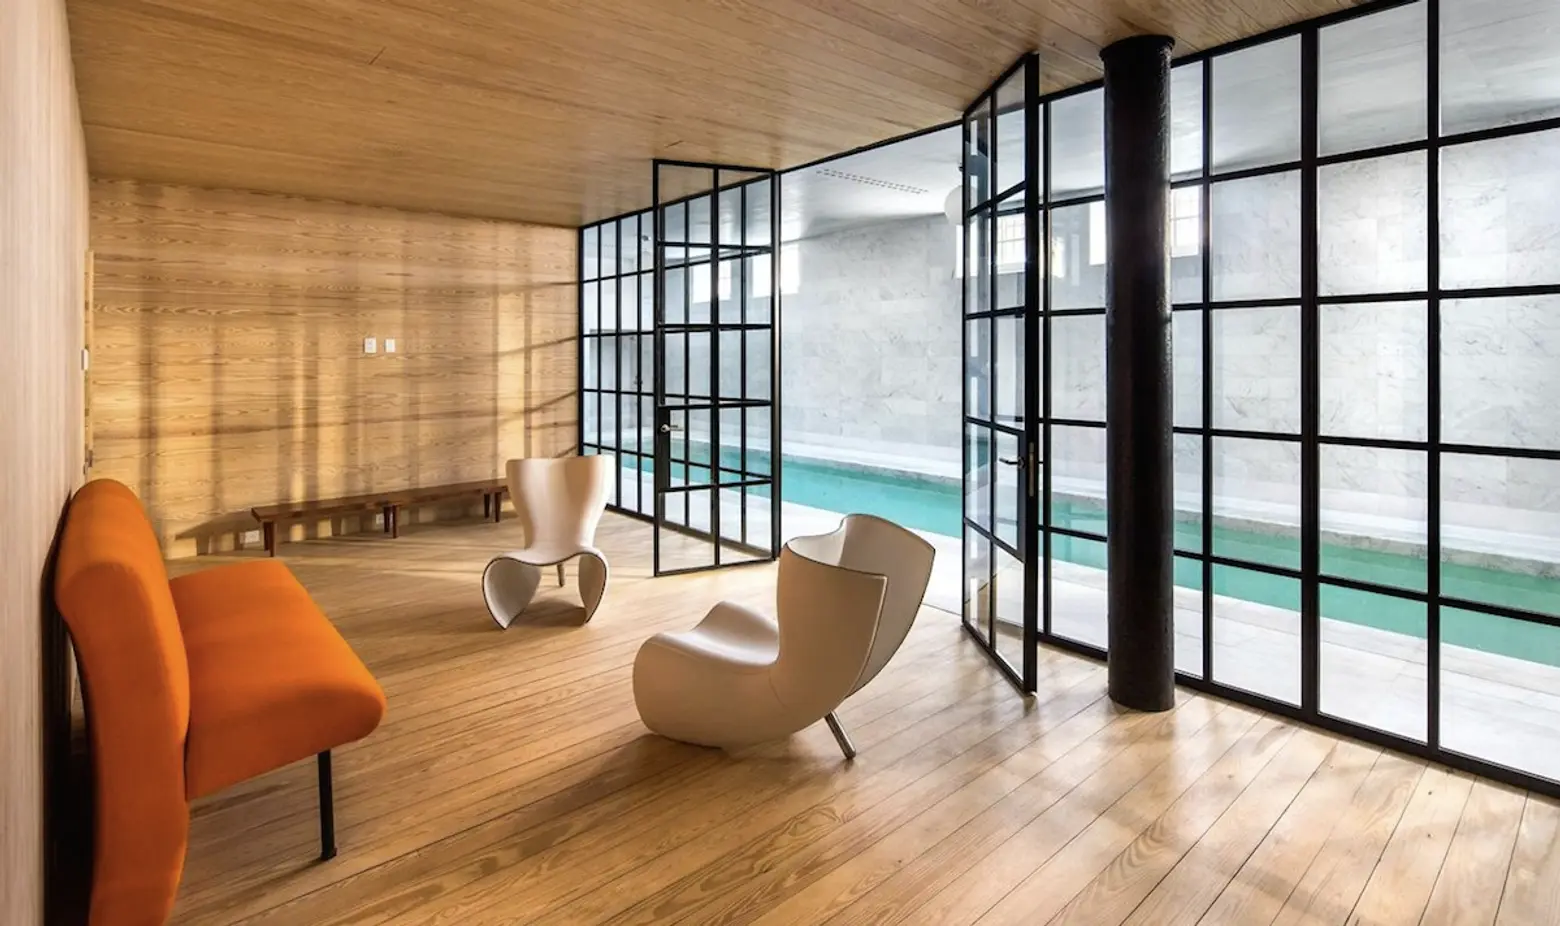 60 Collister Street, Marble House, designer Stuart Parr, 44-foot long indoor lap pool